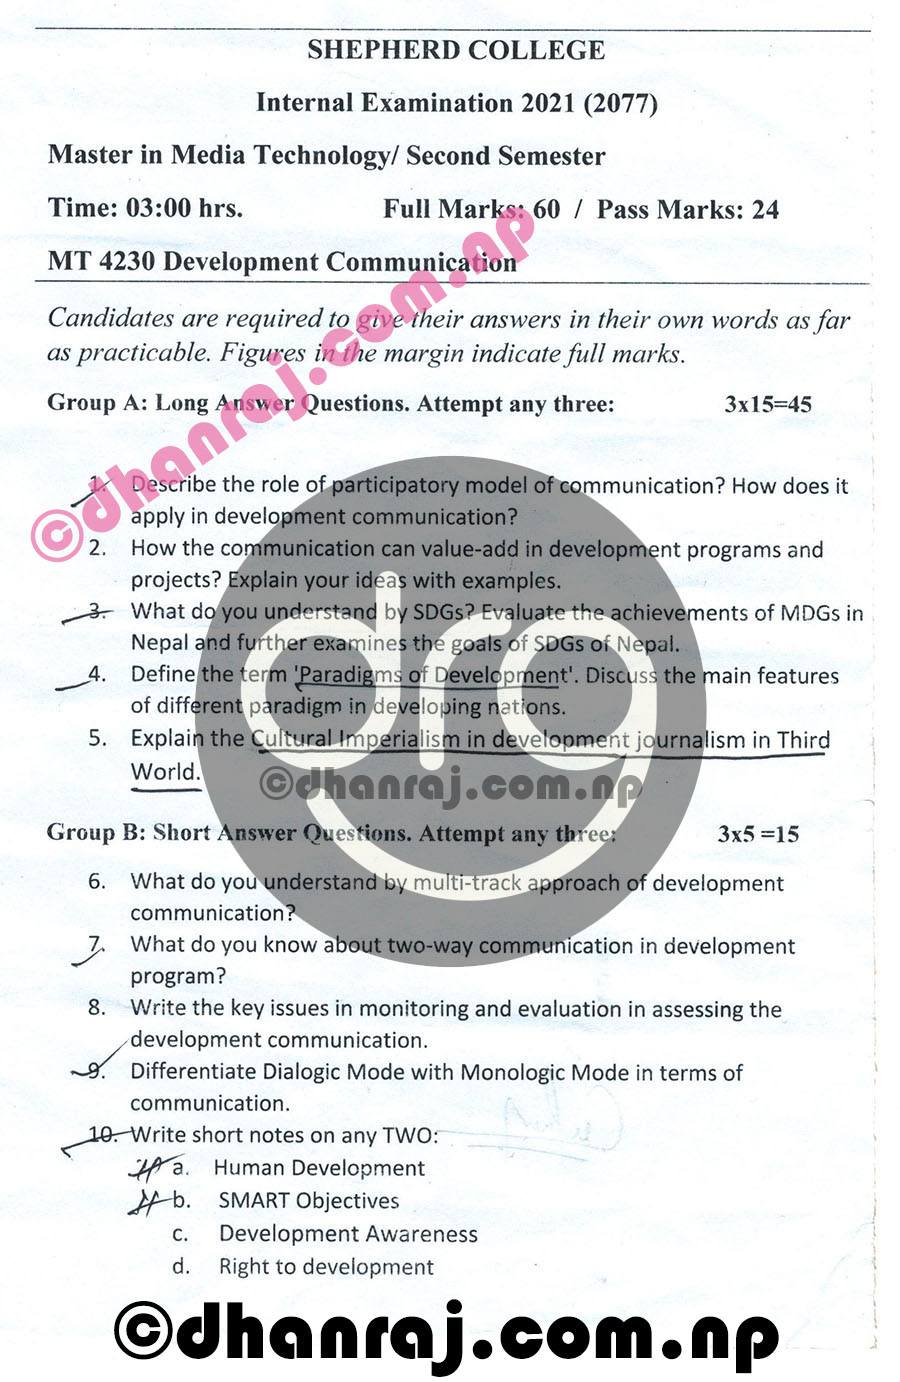 development-communication-mt4230-question-paper-internal-examination-2077-2021-shephard-college